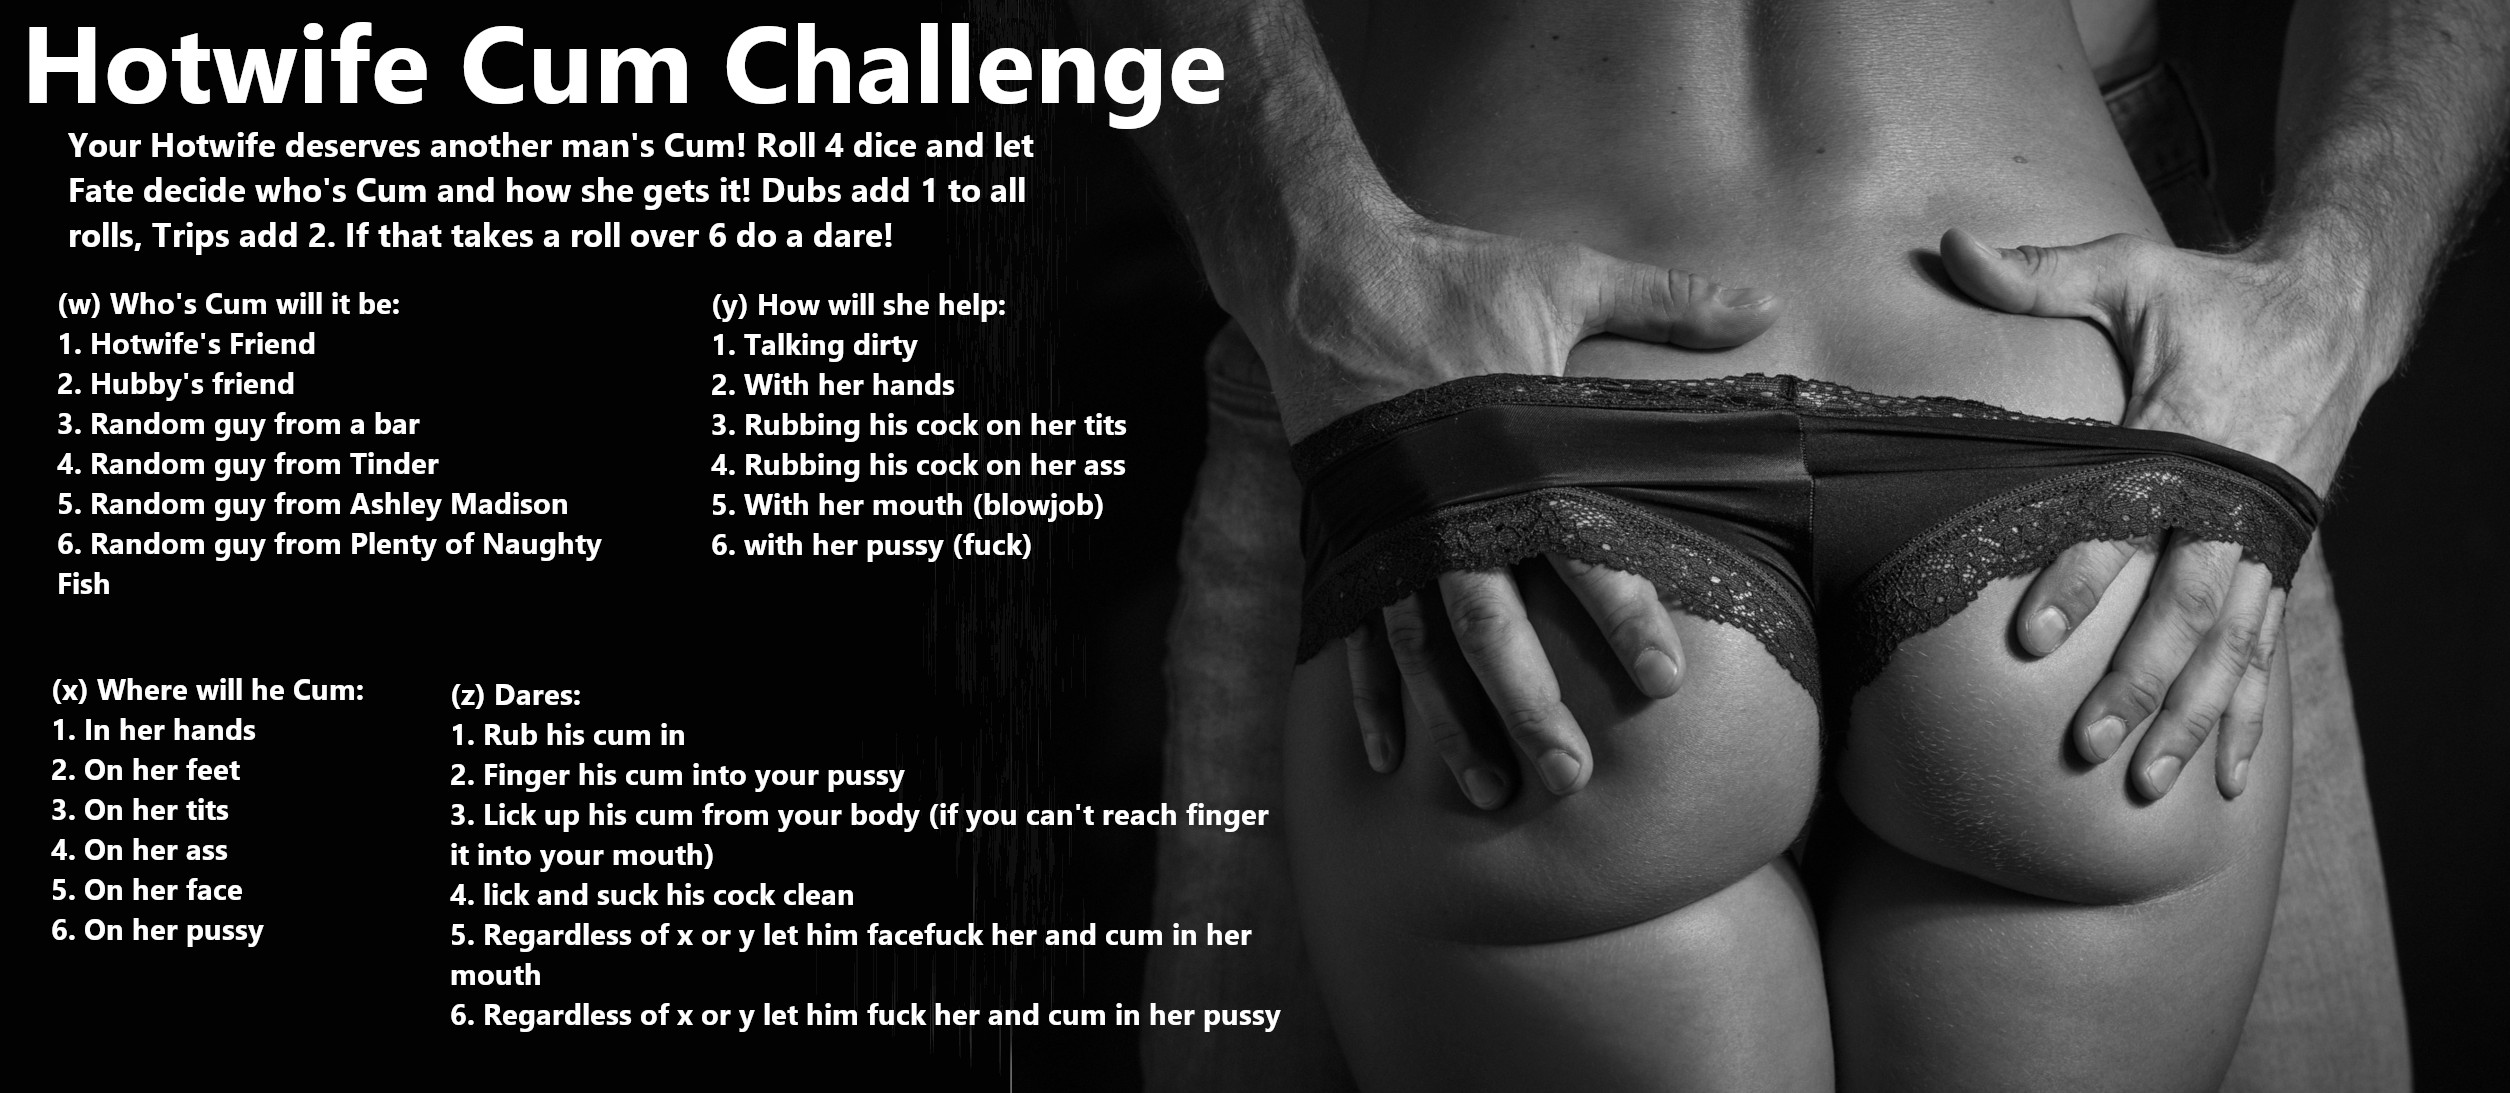 Hotwife Cum Challenge pic pic